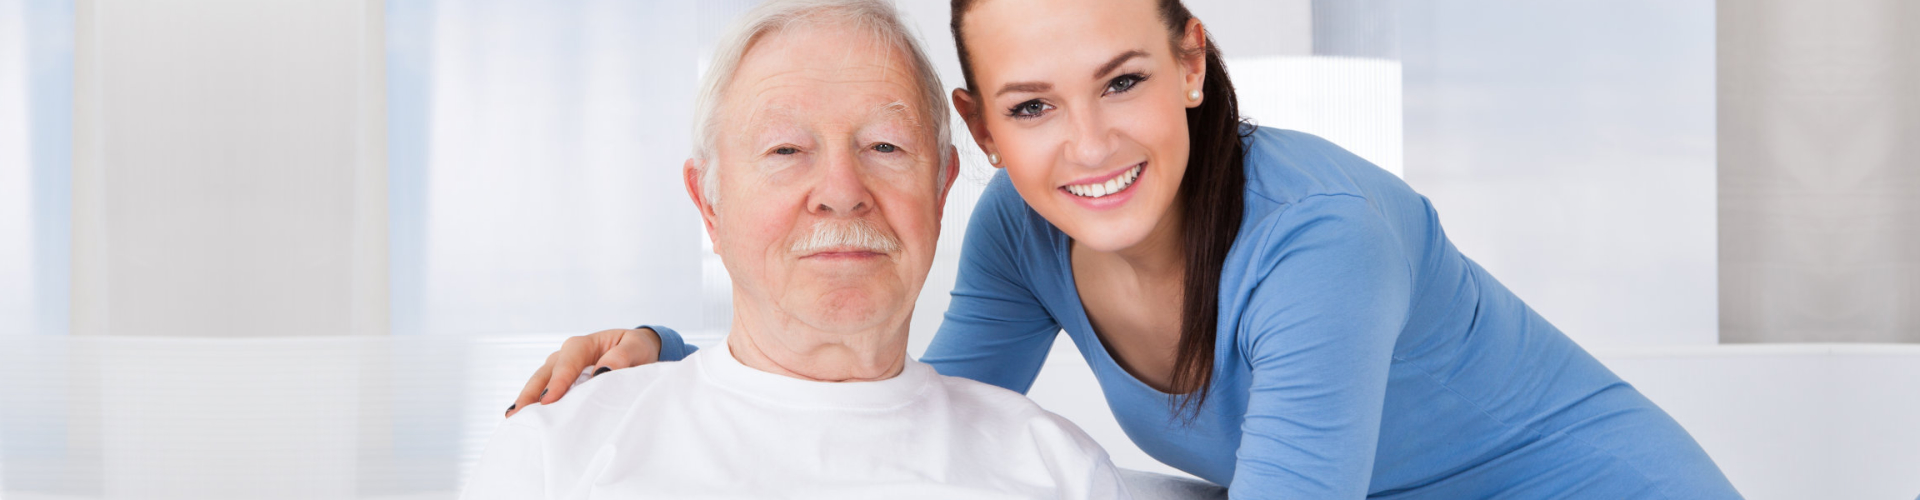 caregiver smiling with elderly man